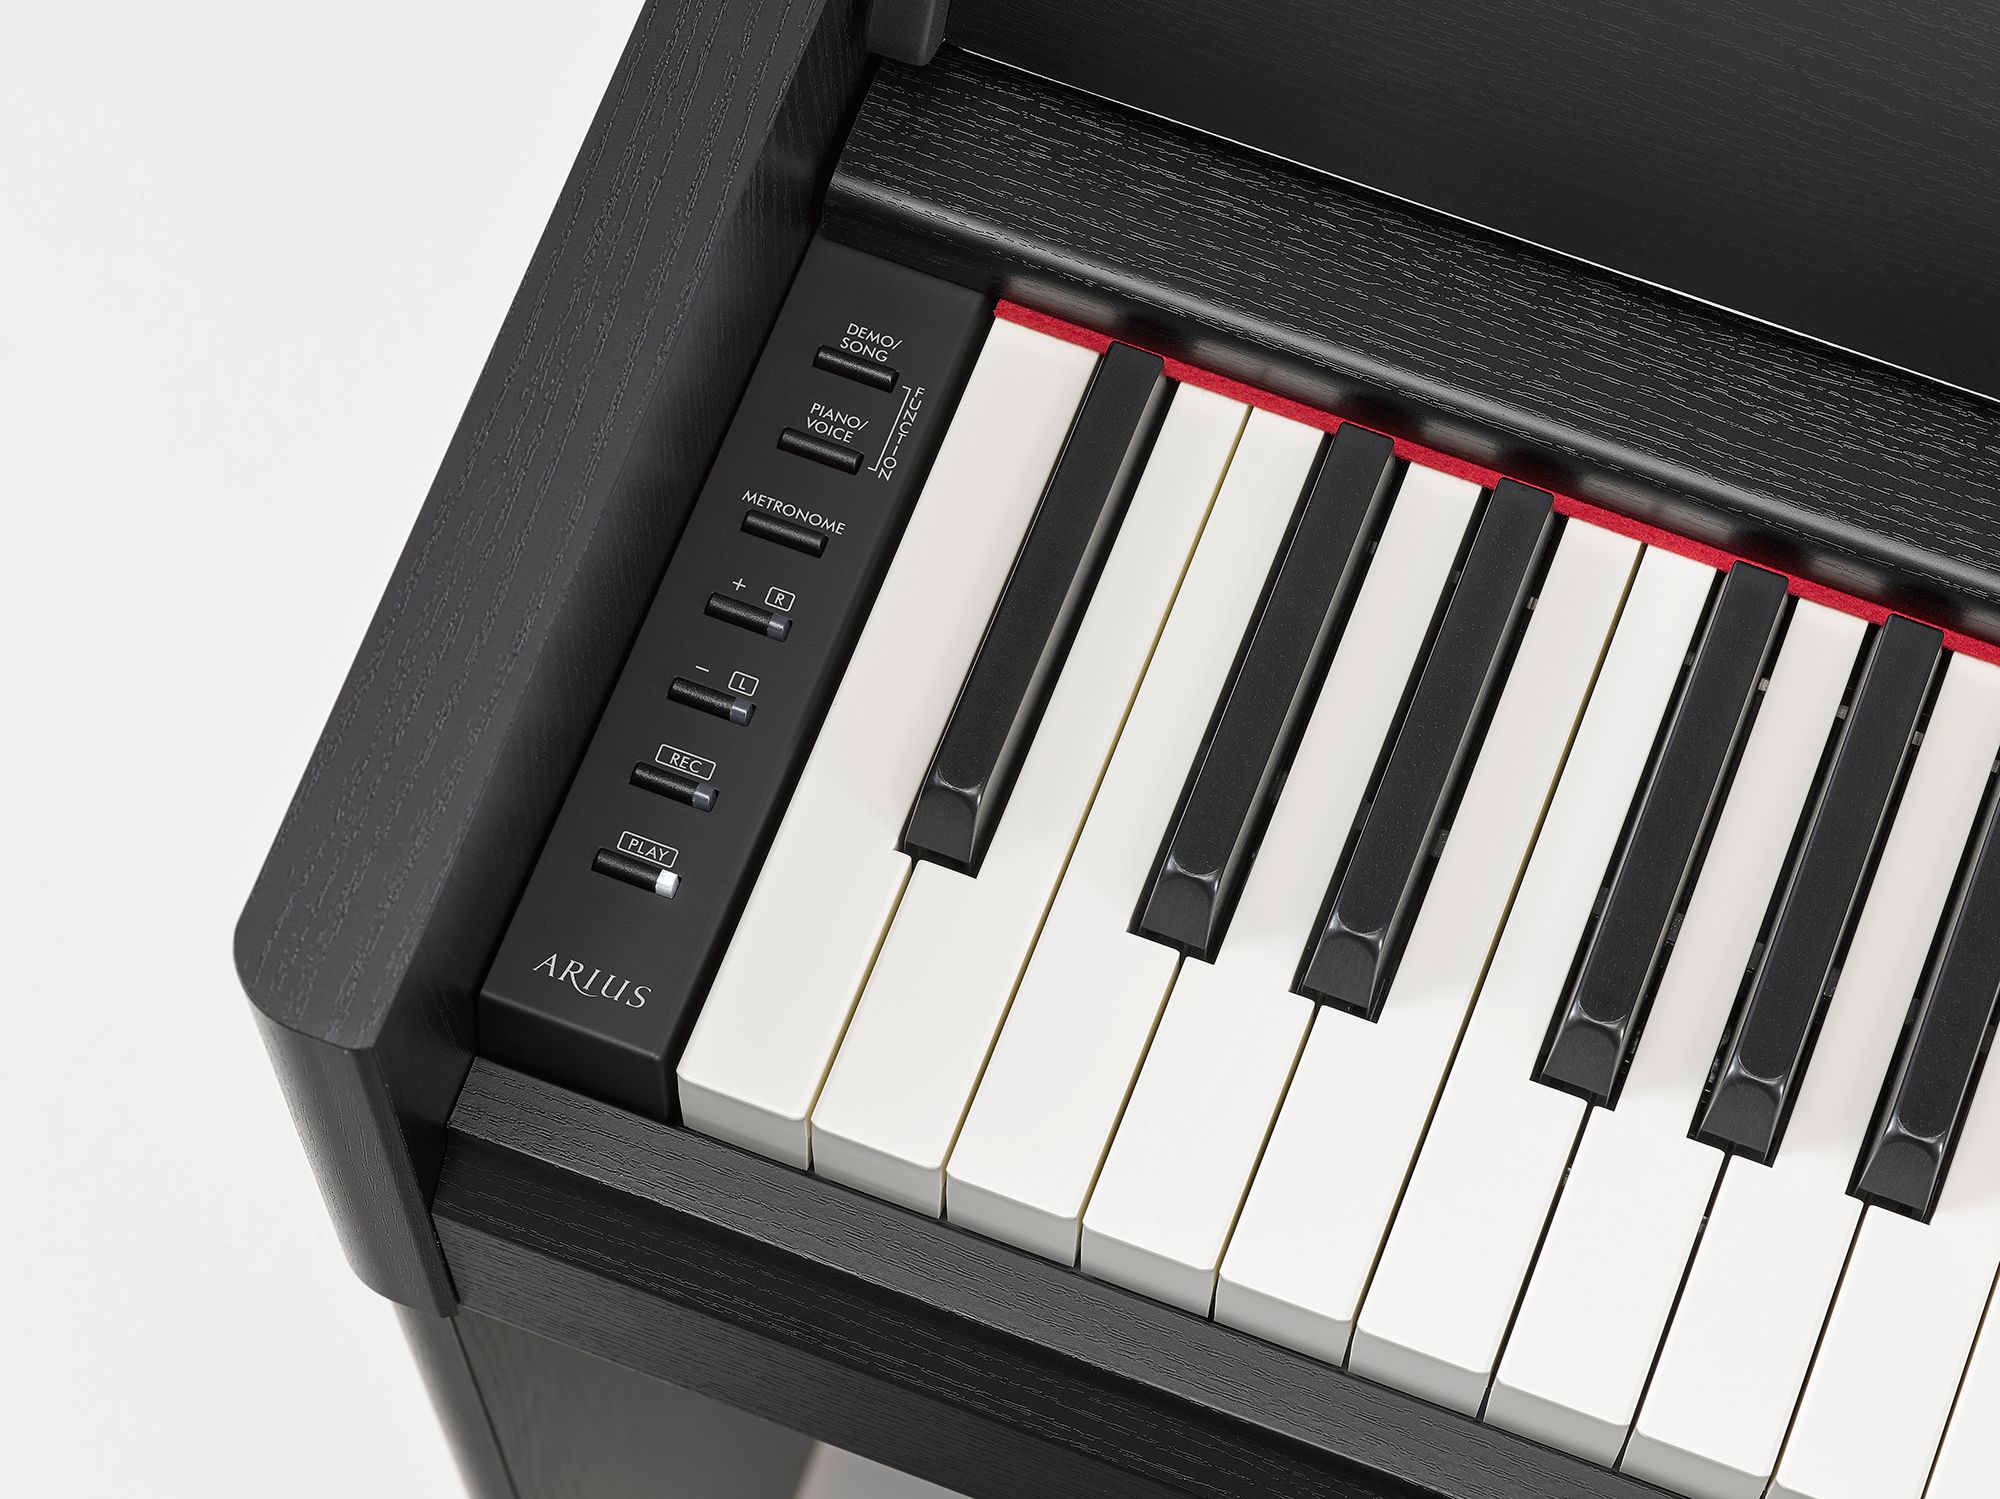 Yamaha Arius YDP-S55 Digital Piano with bench and headphone (*3 Years Warranty)